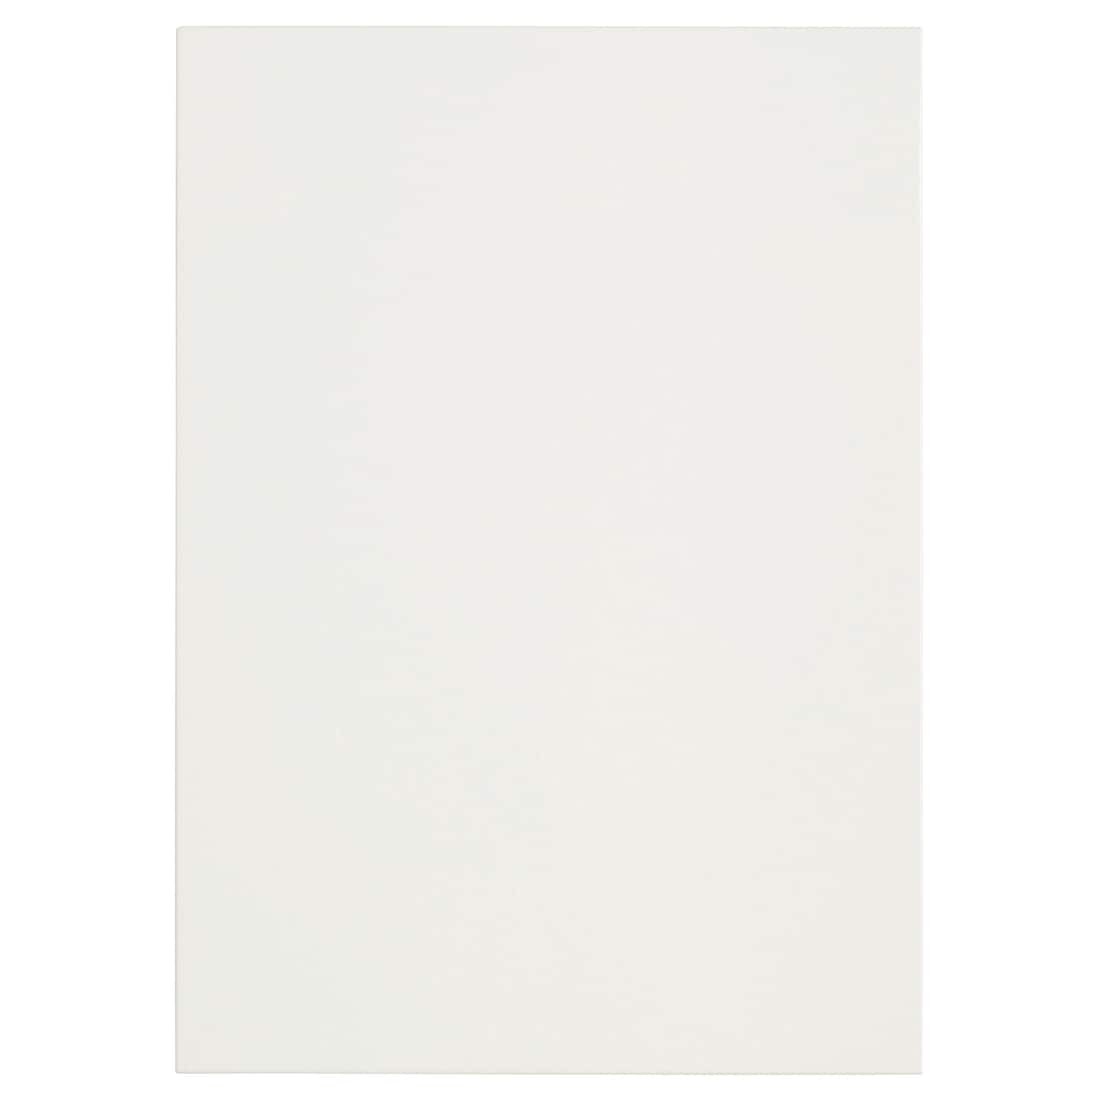 IKEA APLARED АПЛАРЕД Дверь, белый, 60x70 cм 30431772 | 304.317.72